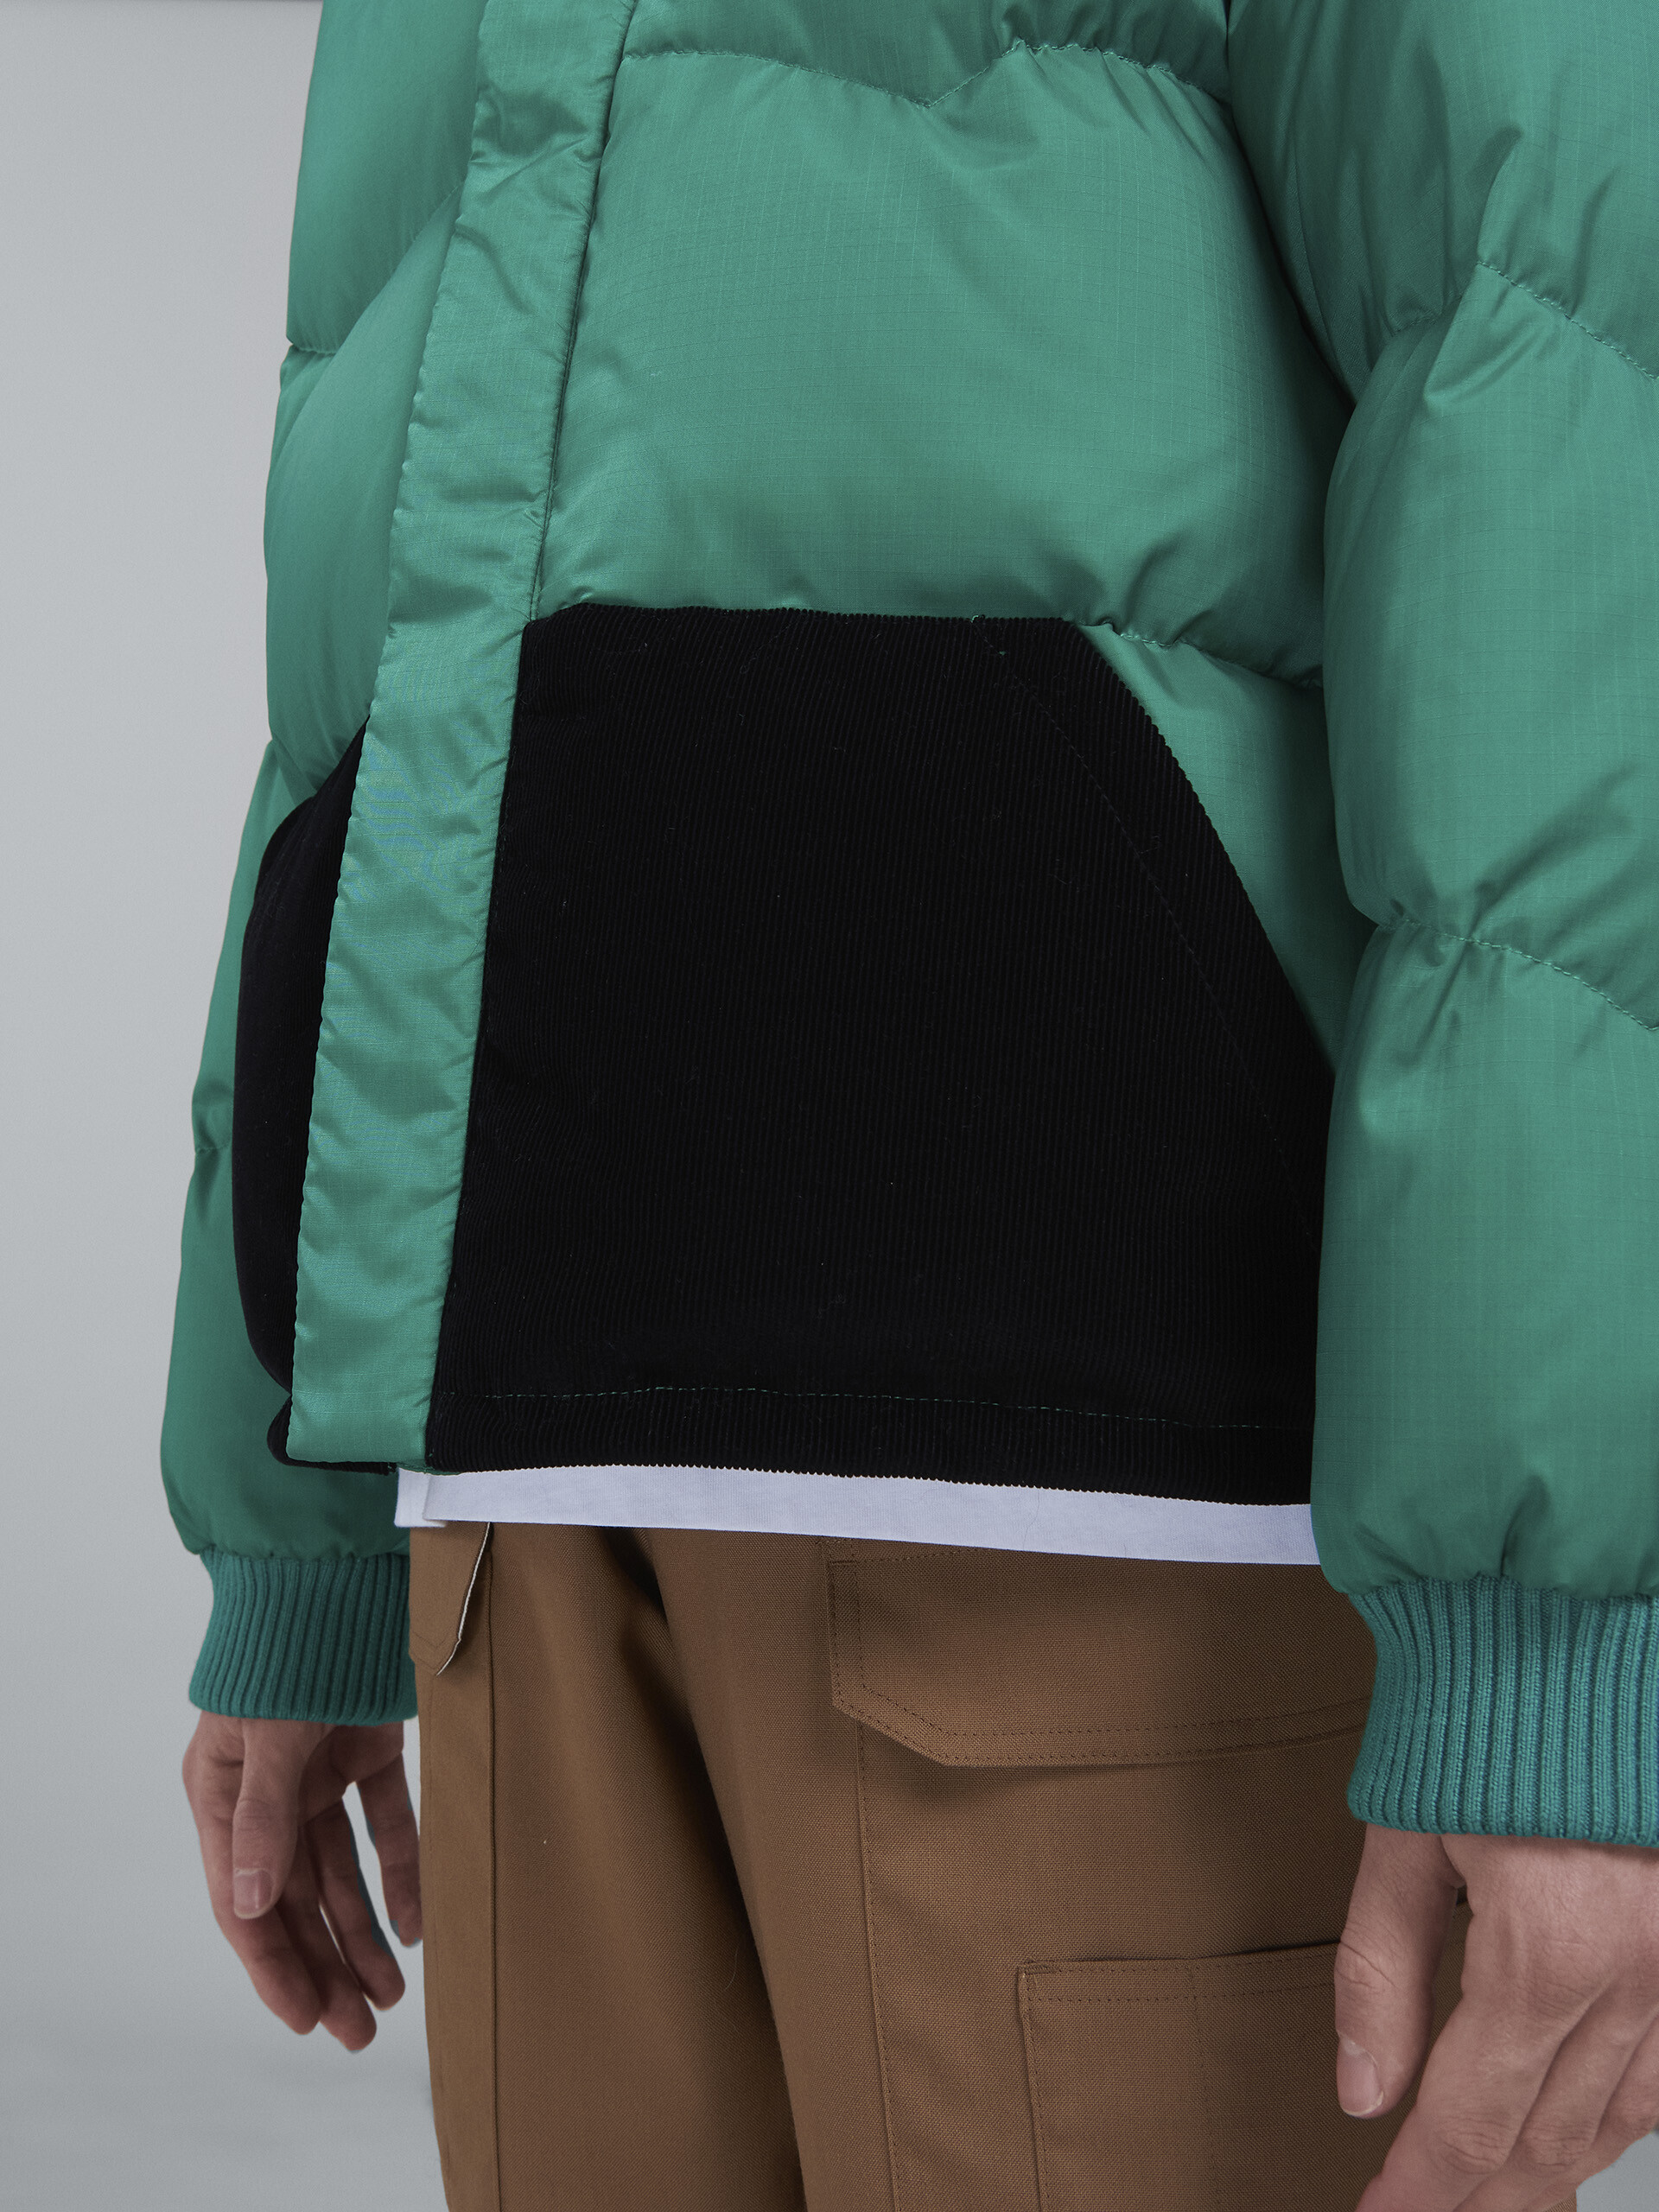 Ripstop nylon down jacket - Winter jackets - Image 5